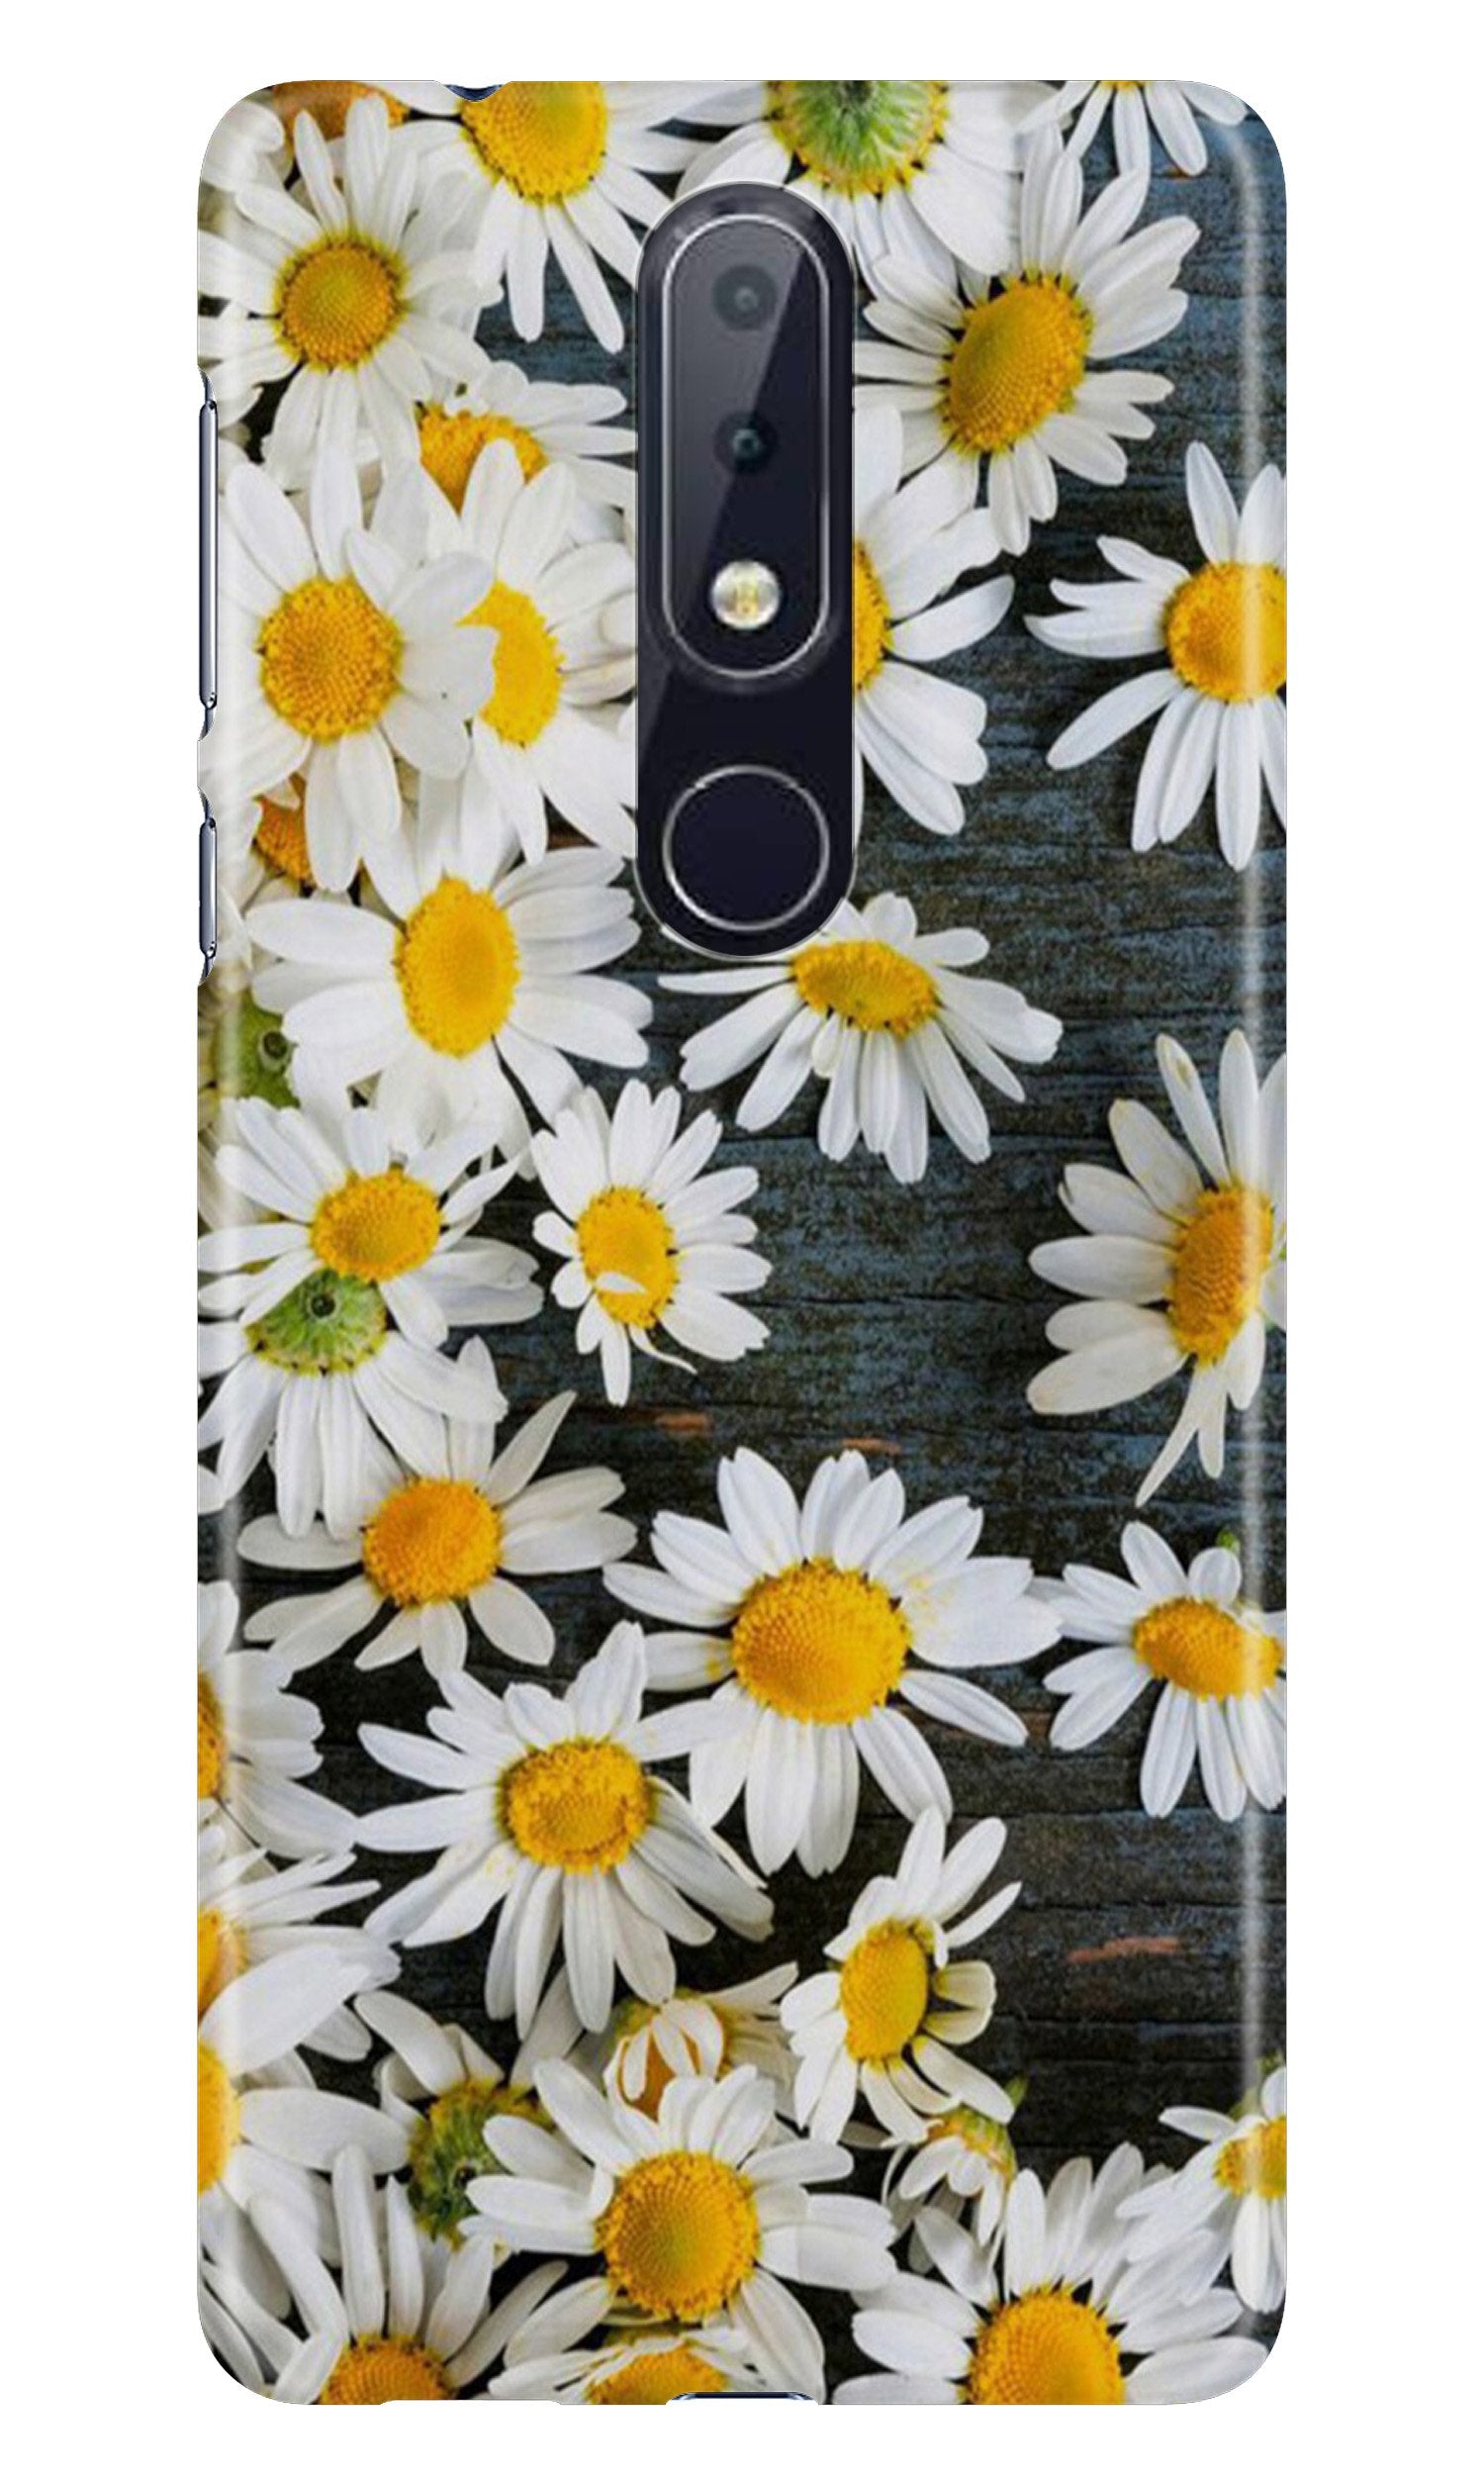 White flowers2 Case for Nokia 3.2